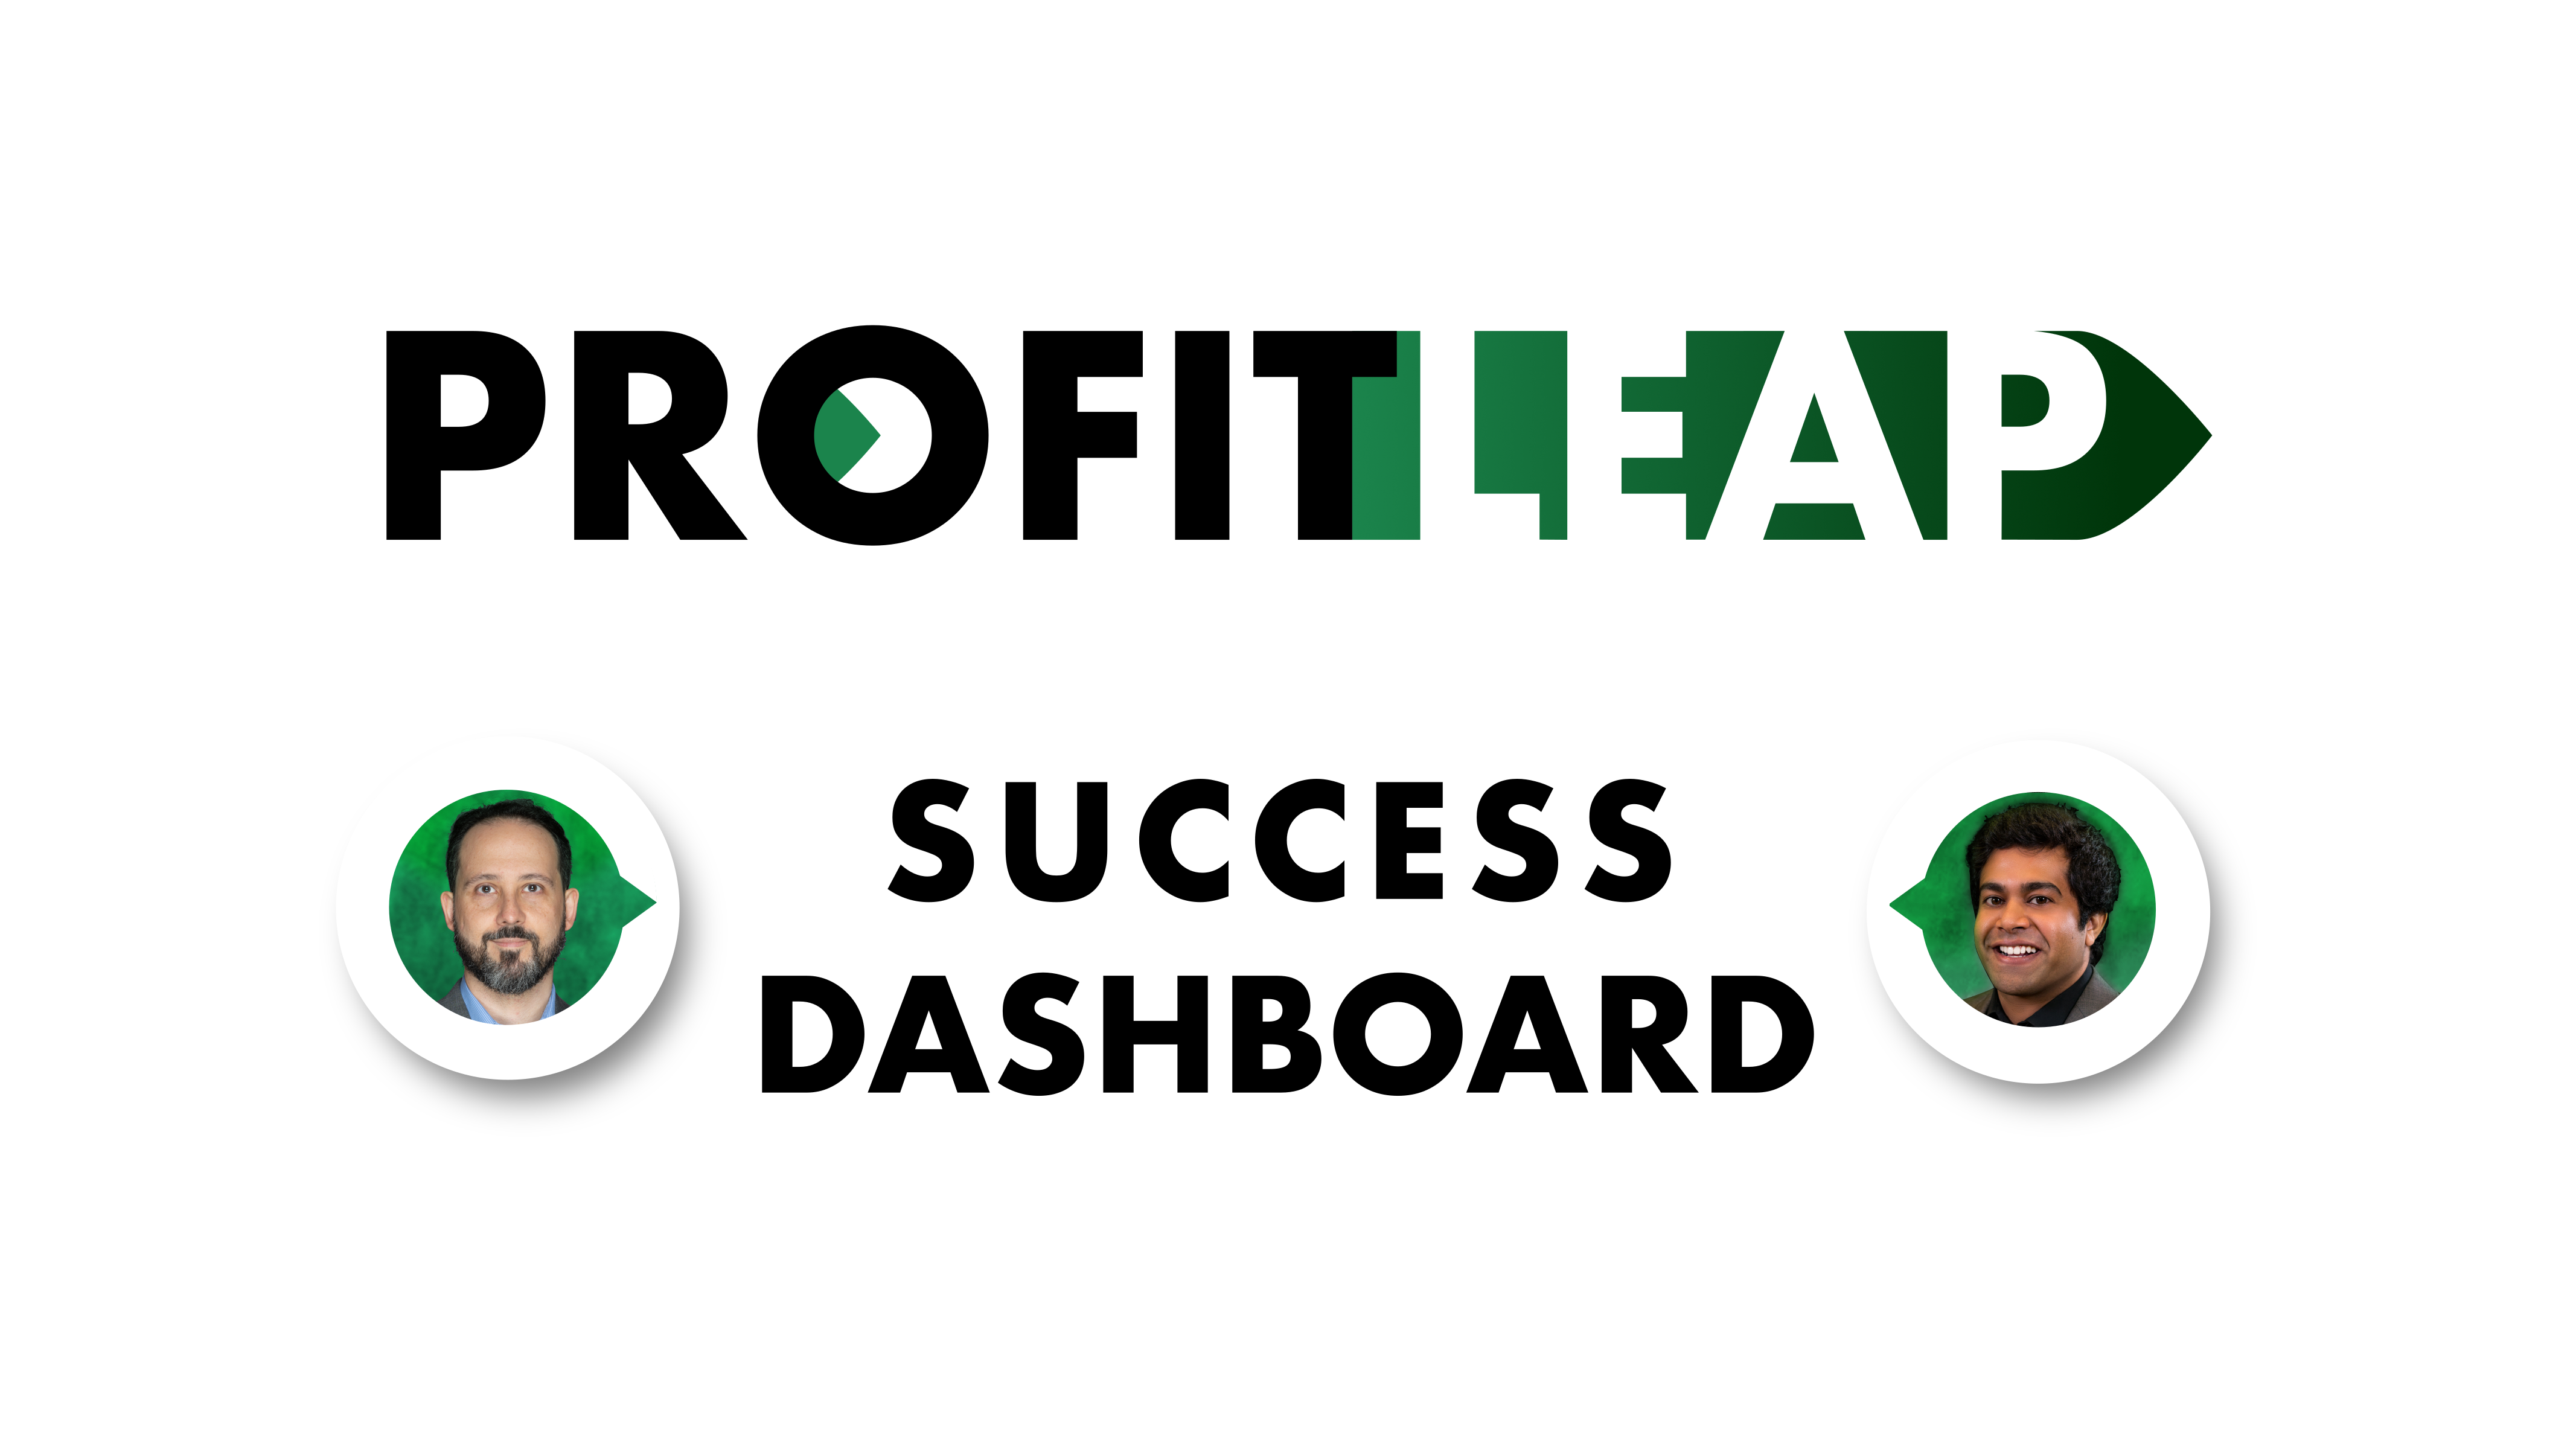 Profit Leap Success Dashboard Video